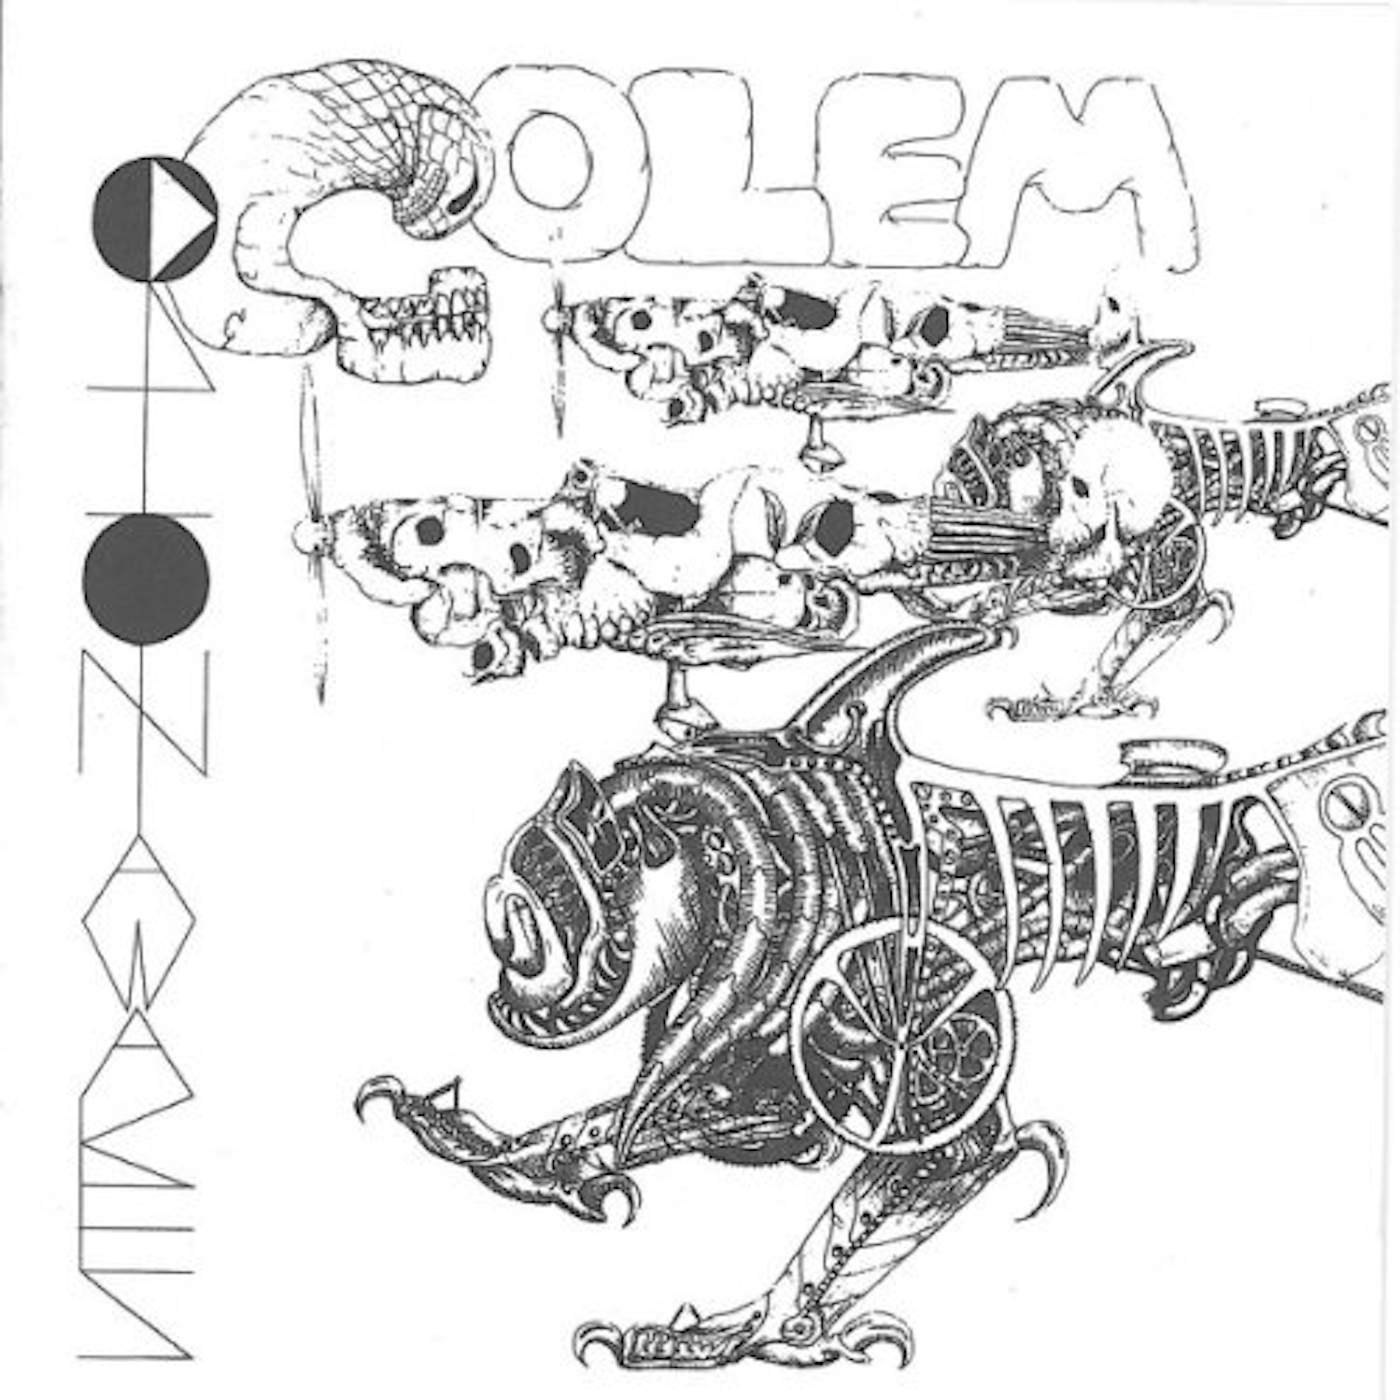 Golem ORION AWAKES CD